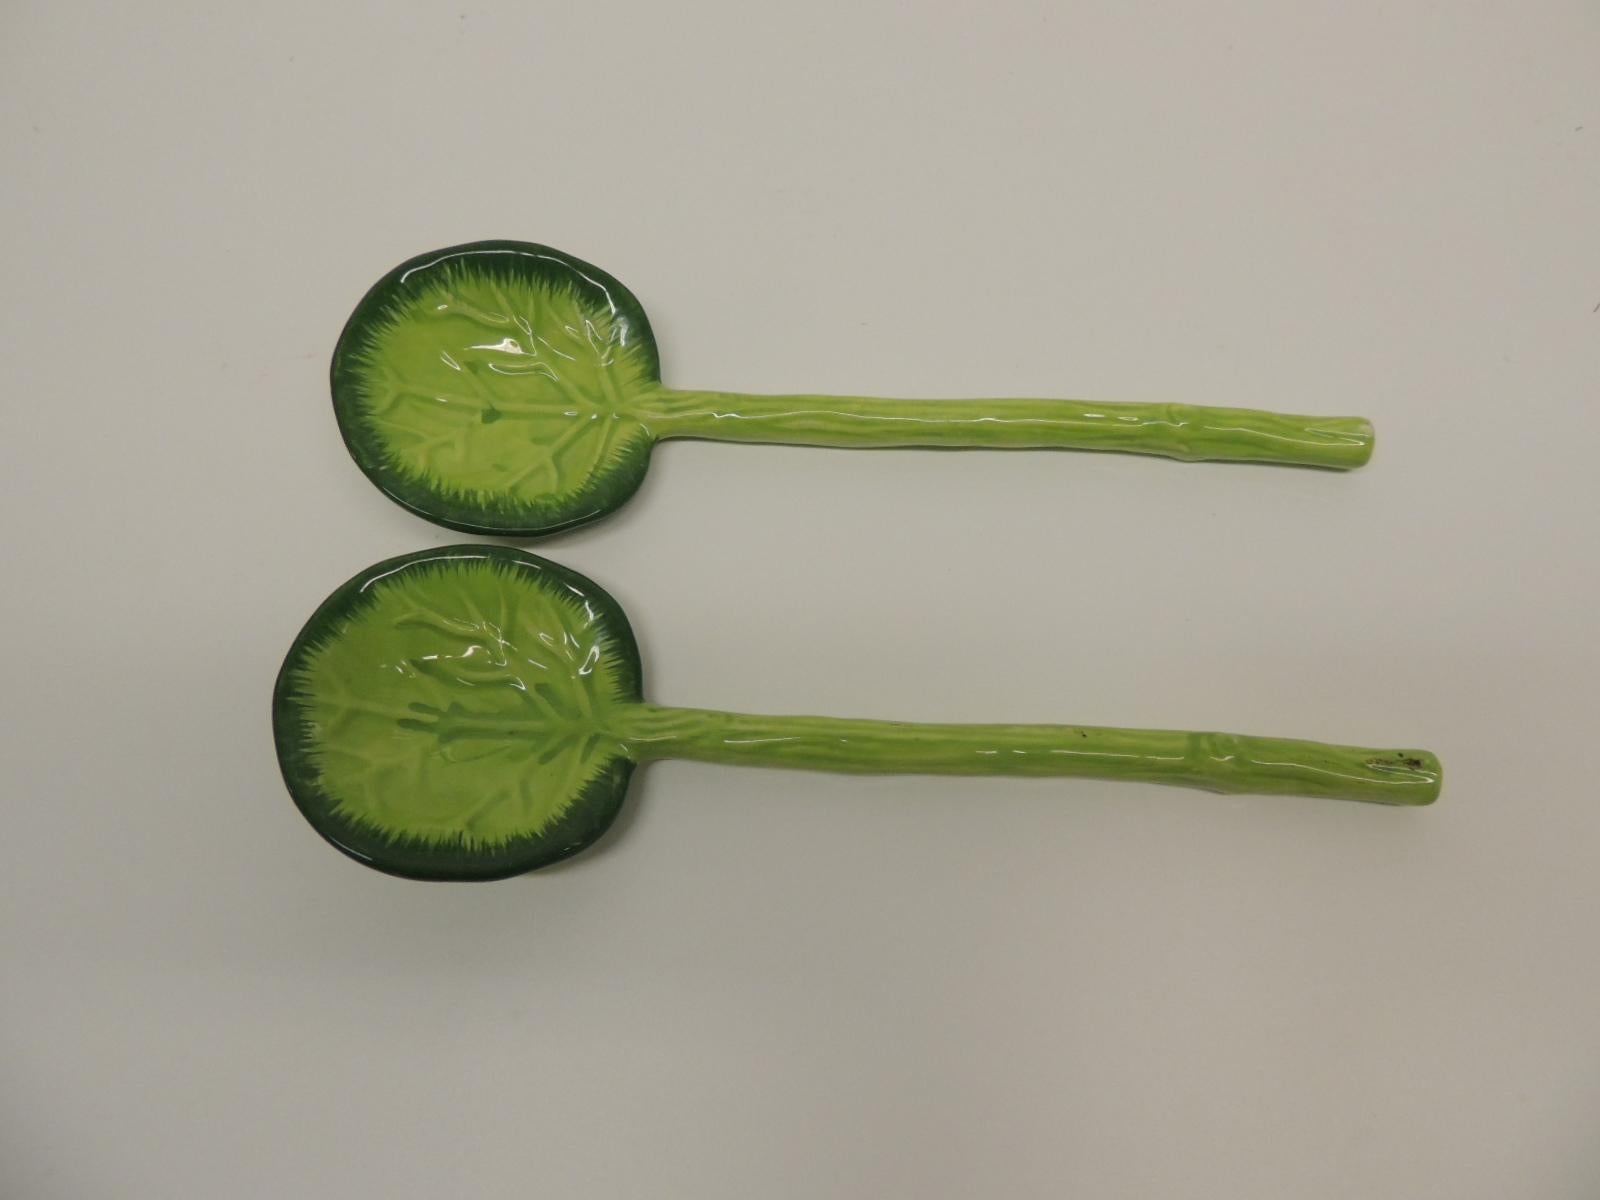 Portuguese Pair of Ceramic Cabbage Leaf Serving Spoons